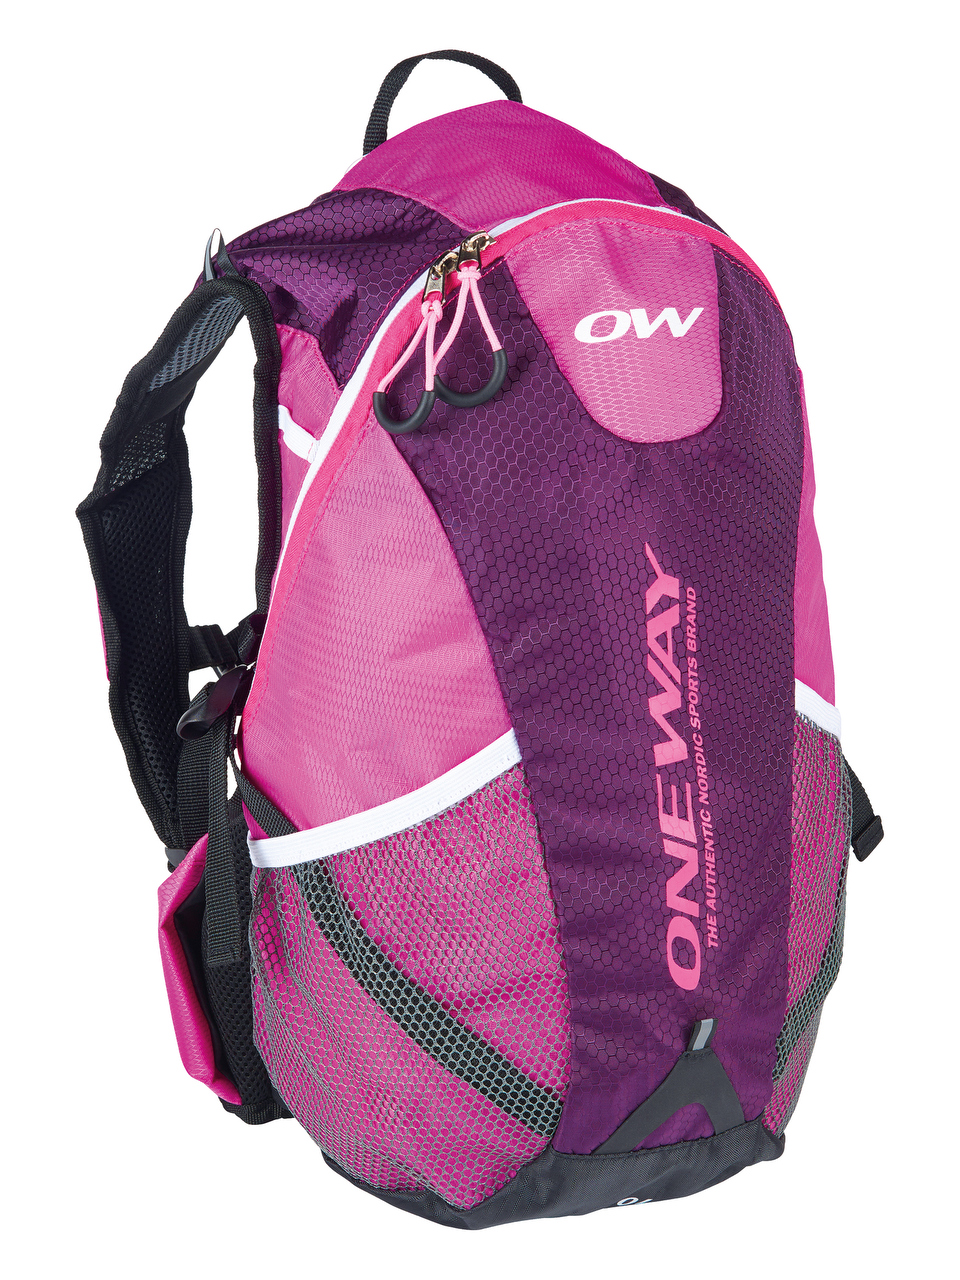 ONE WAY trail Hydro Backpack Rucksack 20 L Pink/Black